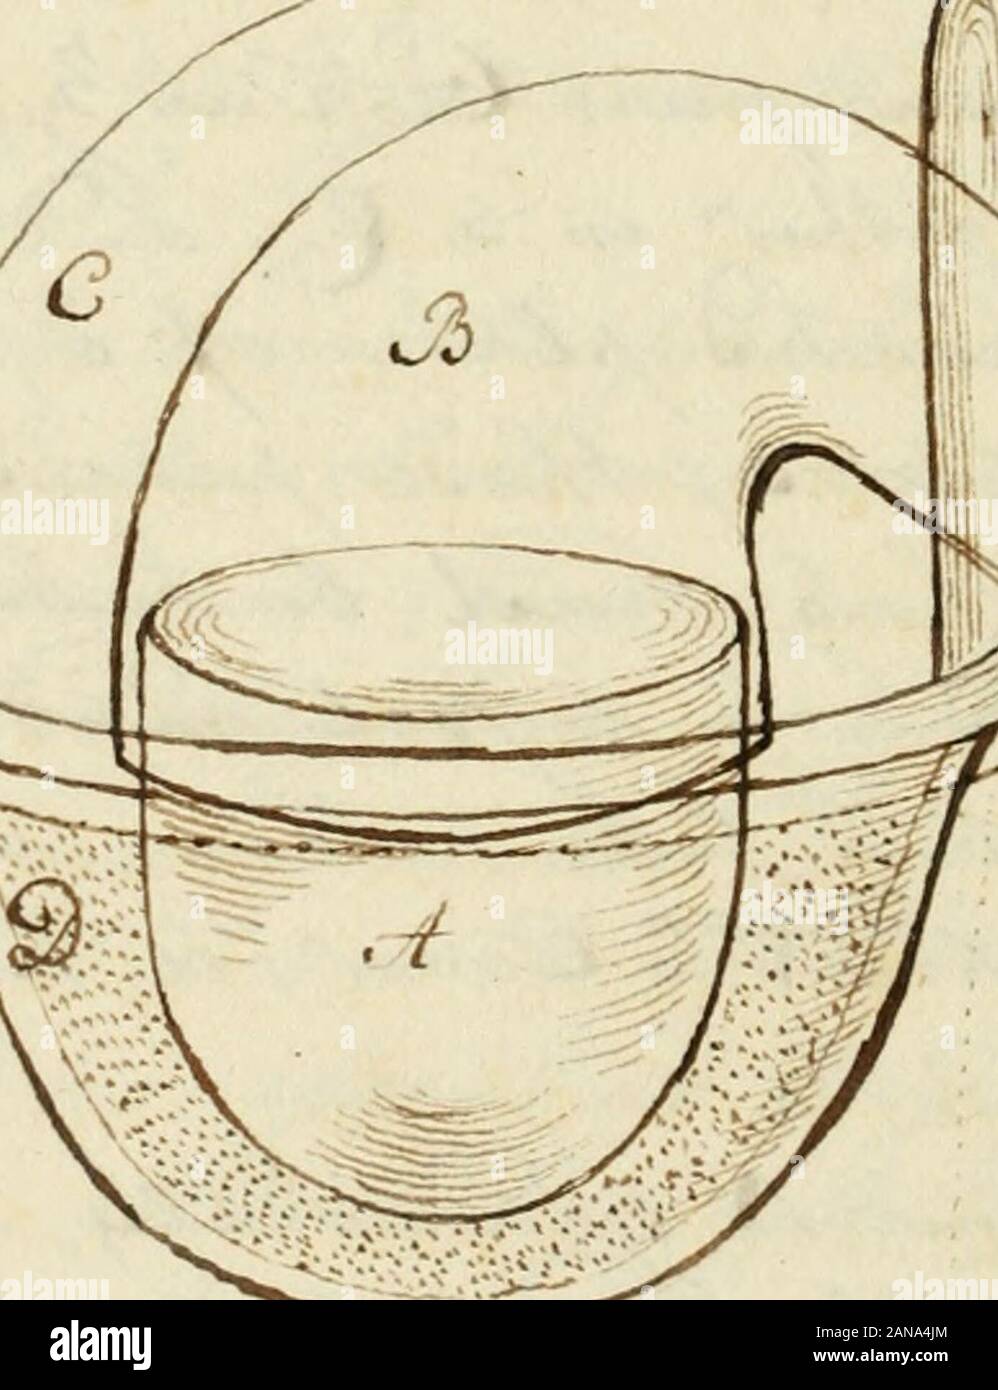 Manly Palmer Hall raccolta di manoscritti alchemici, 1500-1825 . /^^ M^ .^ r u:/^ Si ^: ^7^ ?Ocyn./fi-C ; e S^^ ^^^-^ ^^^?nau^t^ /QUtUt %^h^enrv^. Foto Stock